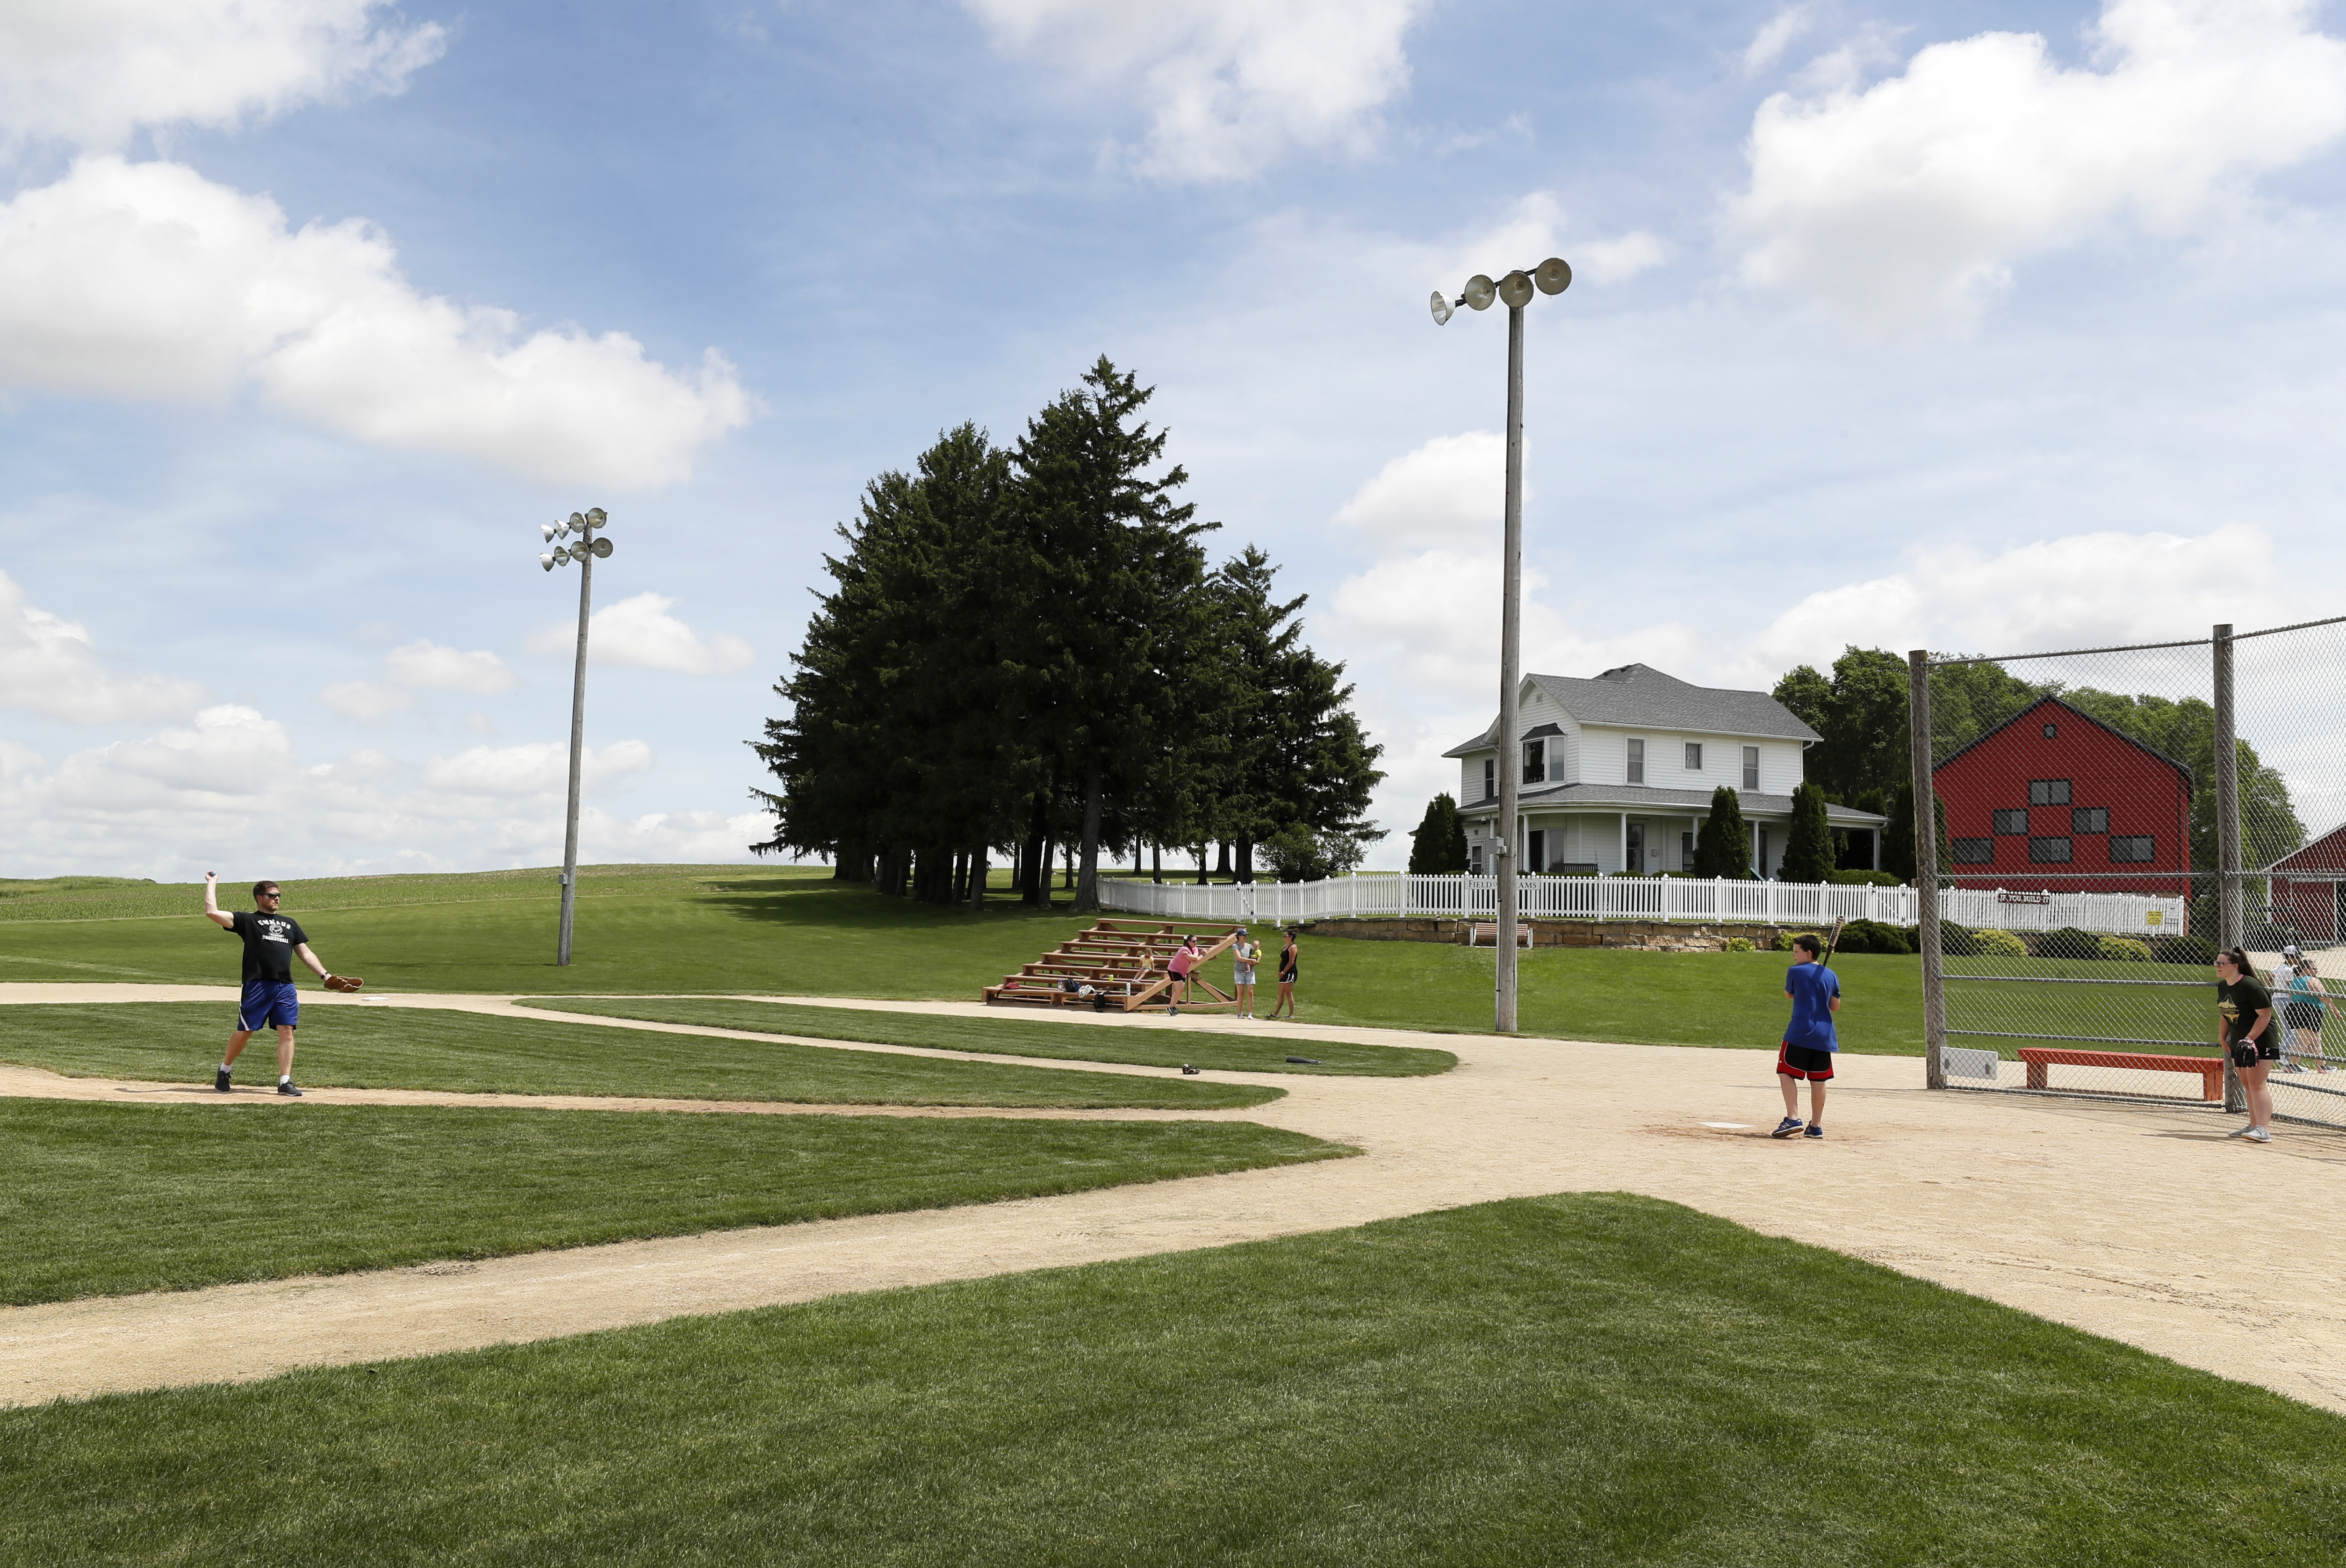 LEADING OFF: 'Field of Dreams' game grows in Iowa cornfield